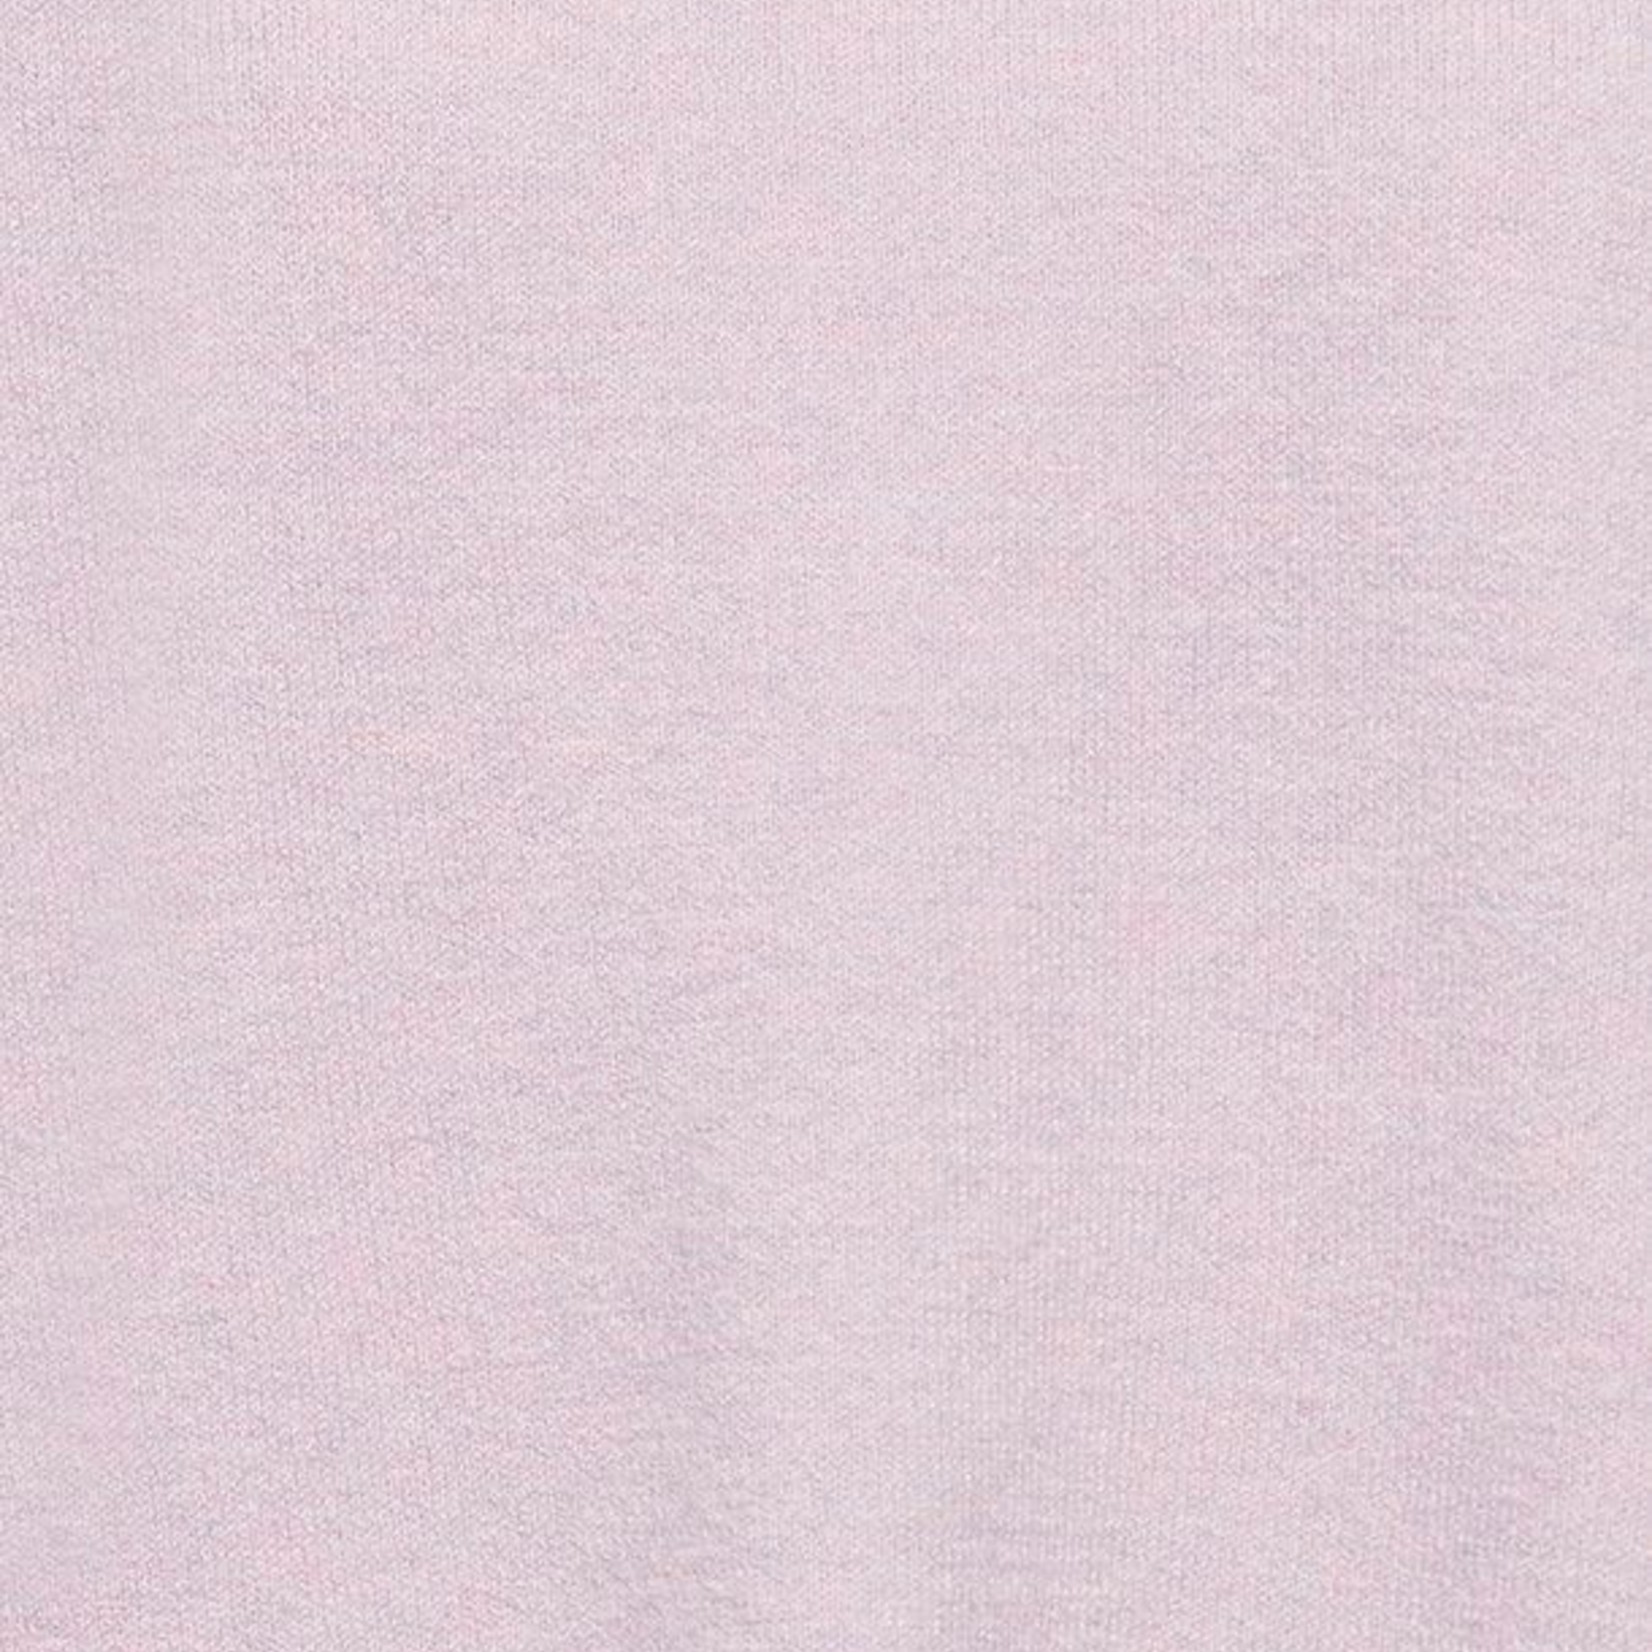 Ichi Pull-over en tricot, Halpa- Lilac